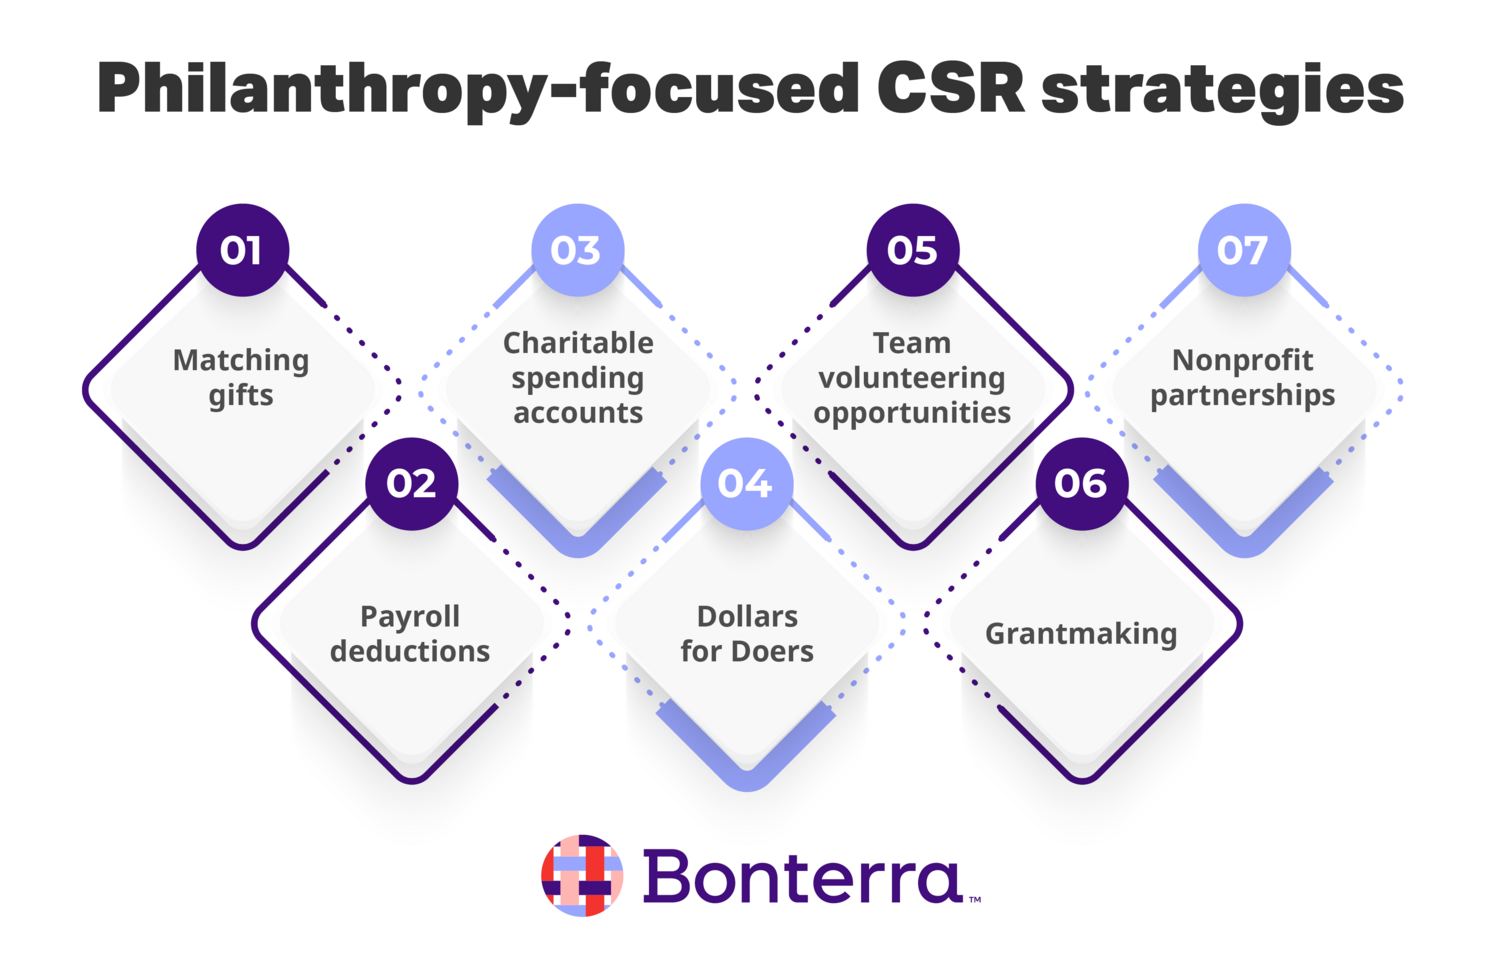 Seven philanthropy-focused CSR strategies, explored in the sections below